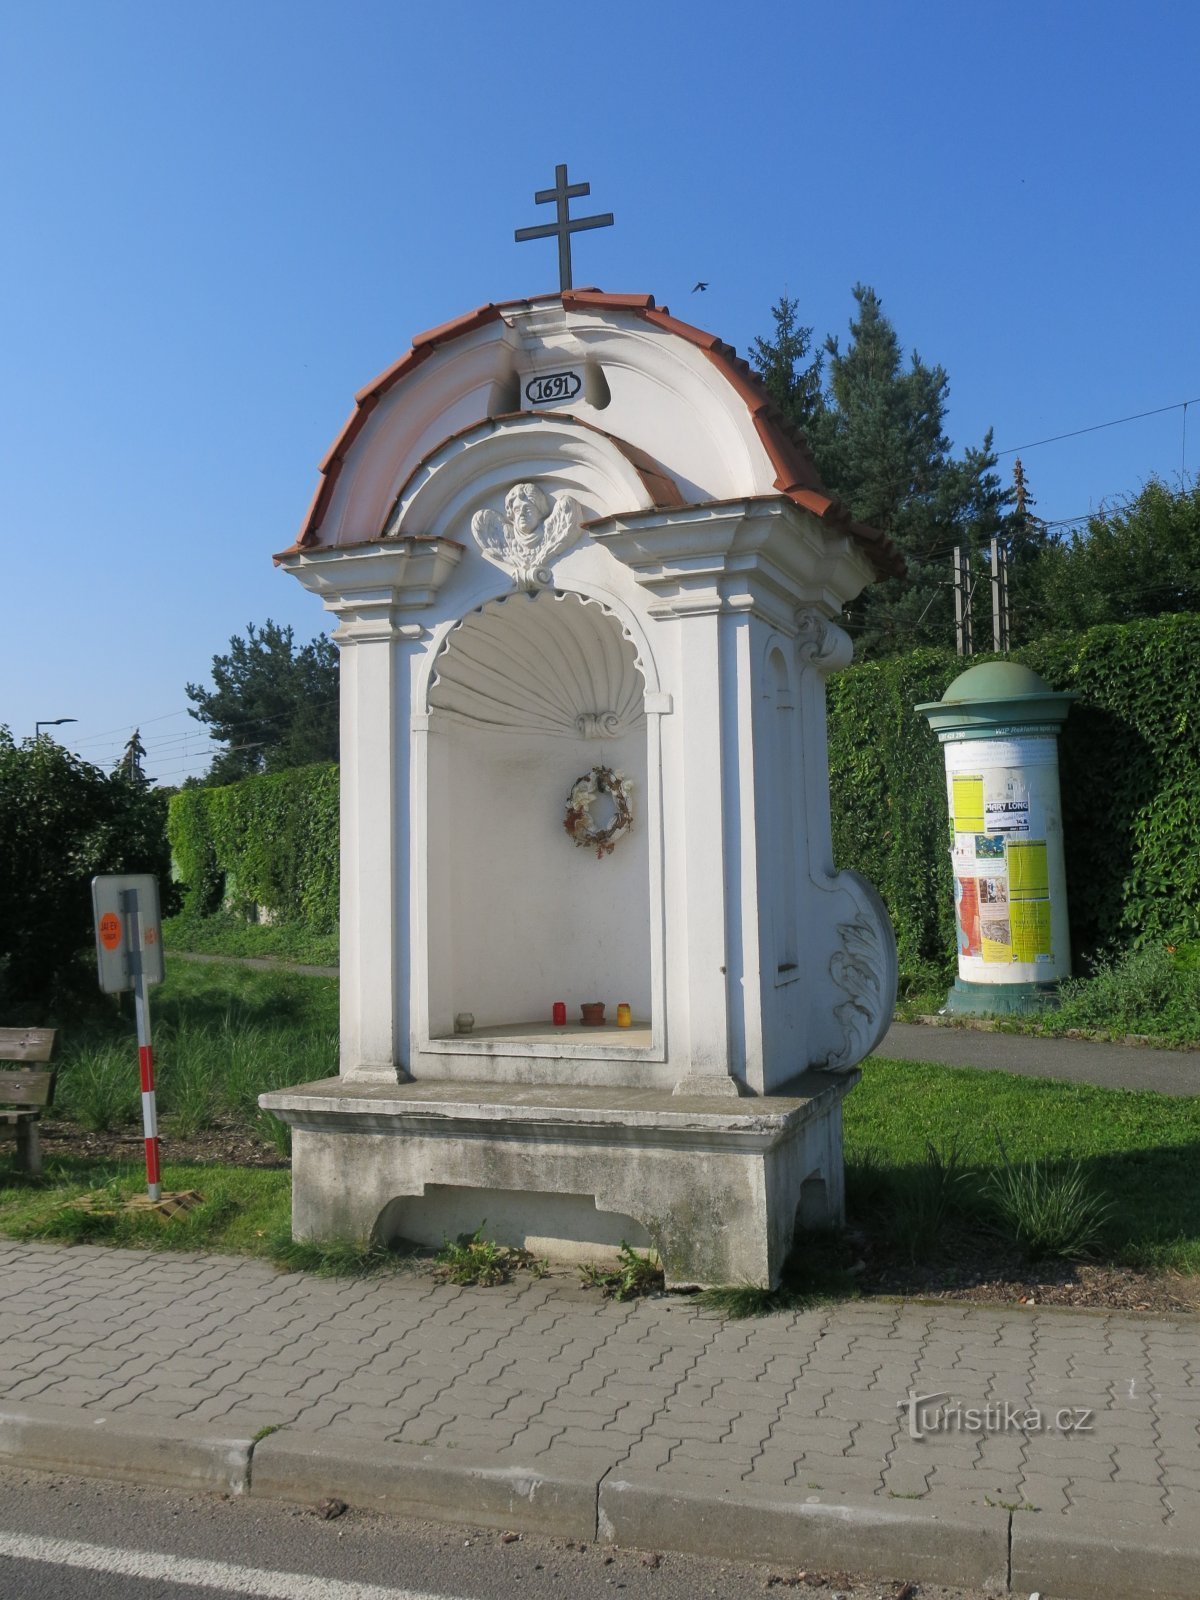 Planá nad Lužnicí - capela de St. Bárbara